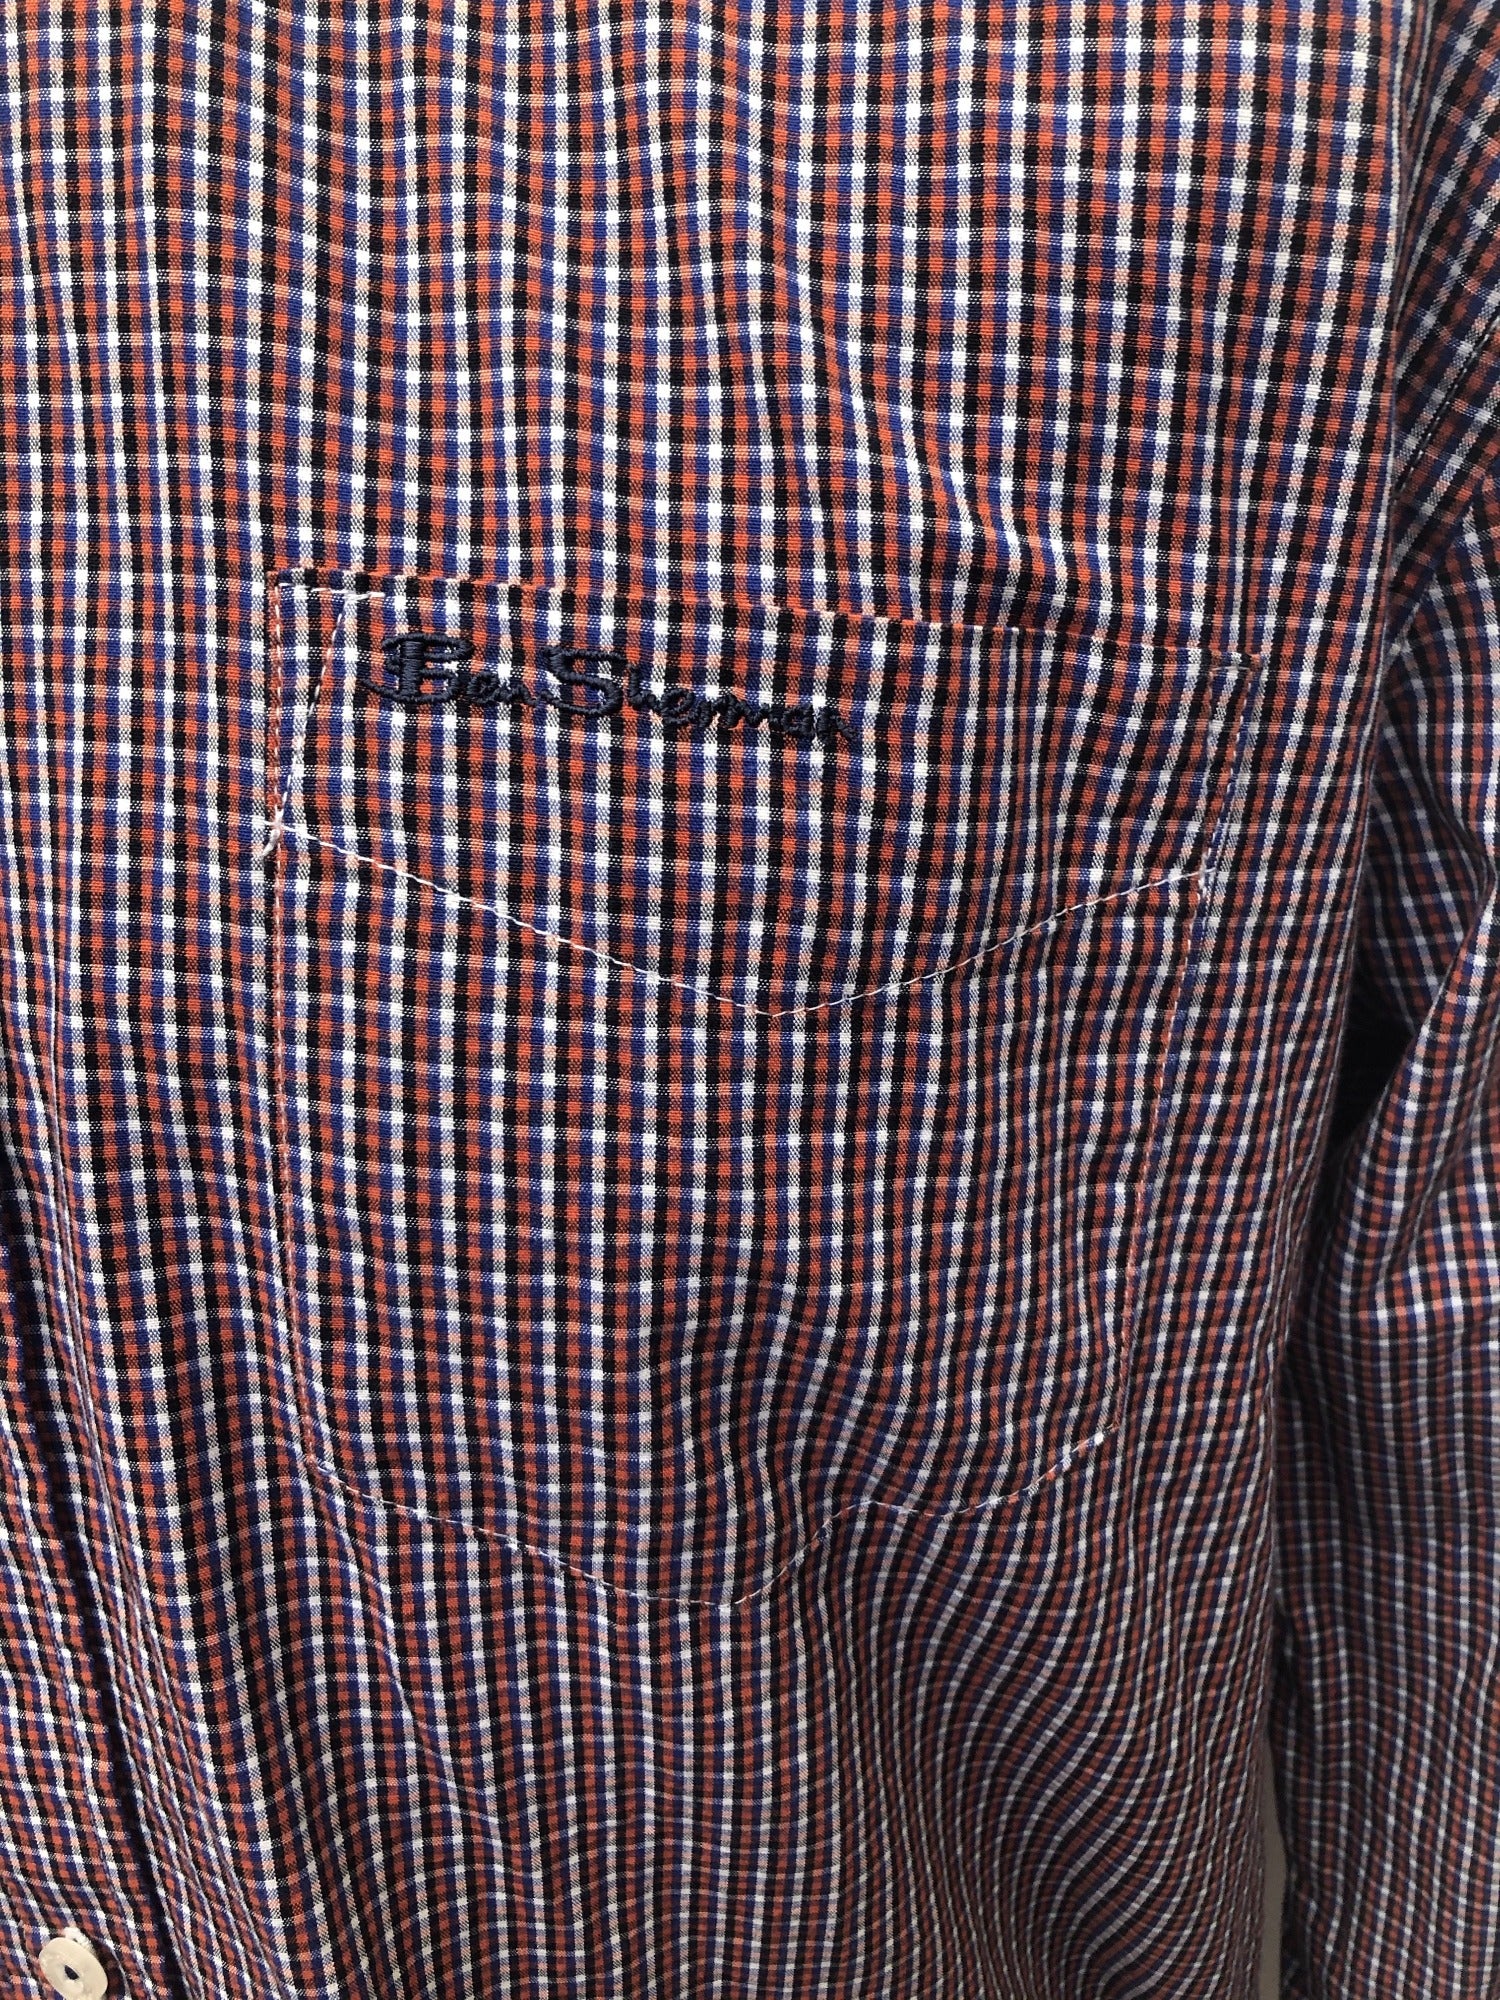 Urban Village Vintage  shirt  multi  mod  mens  M  long sleeves  long sleeve  checked  check  button down  Ben Sherman